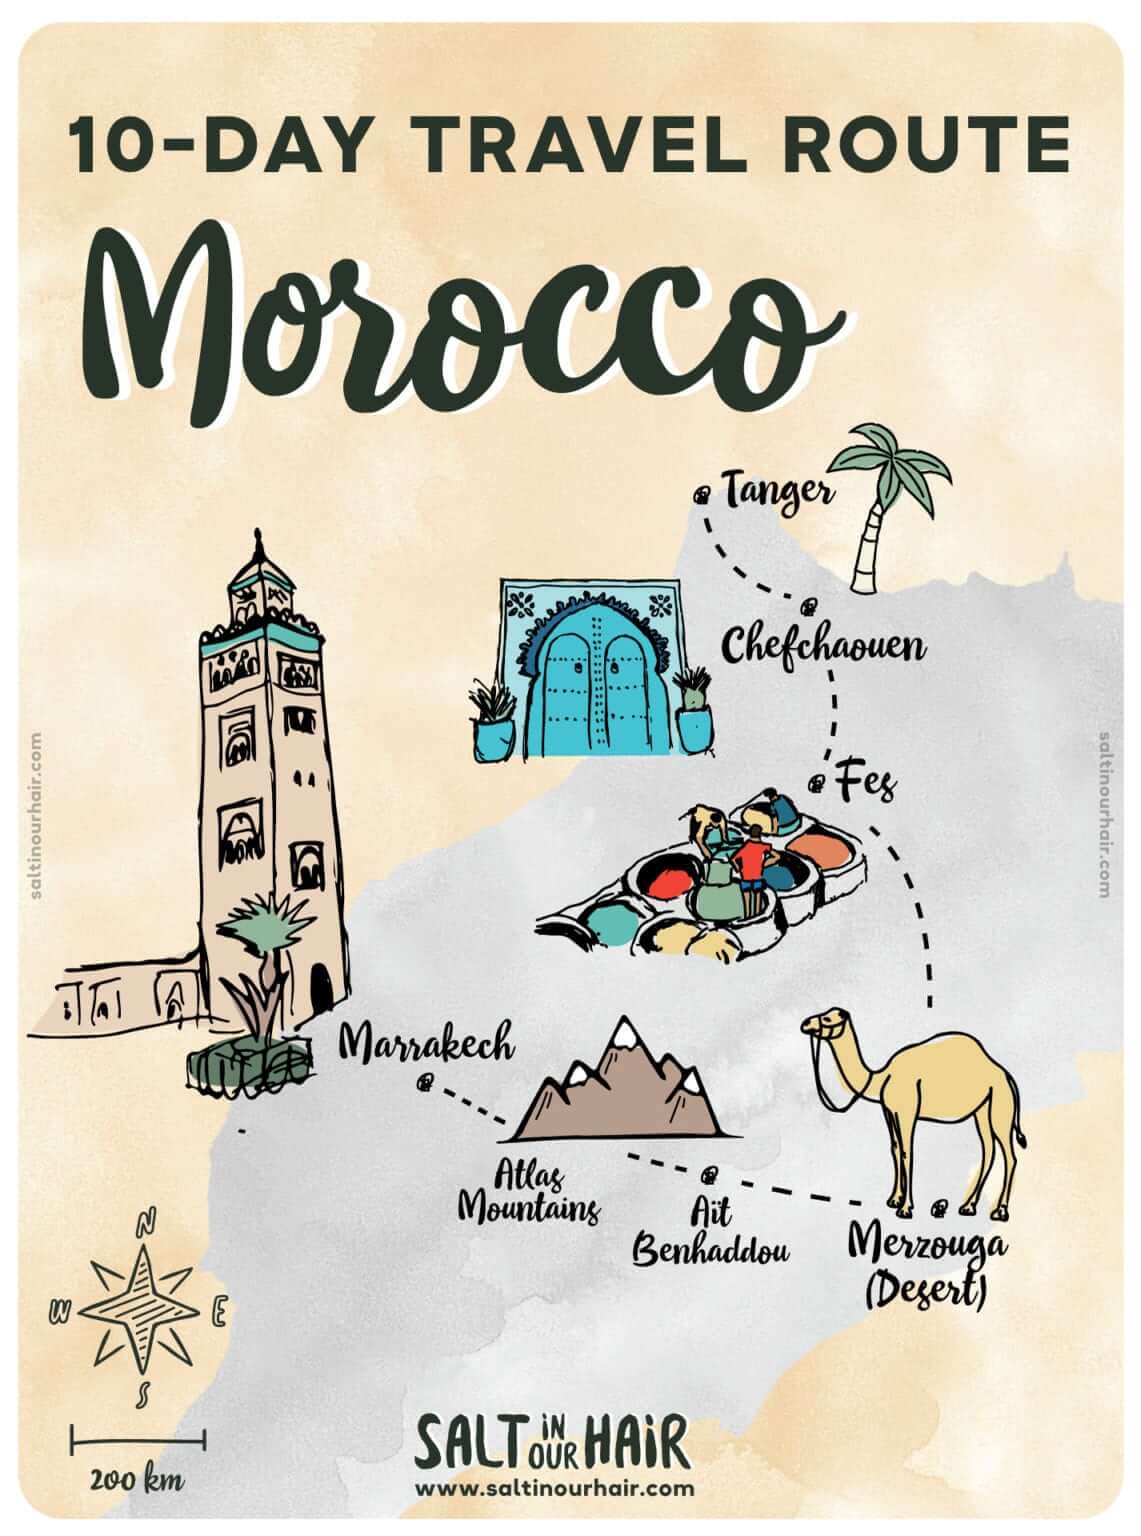 guide tour in morocco